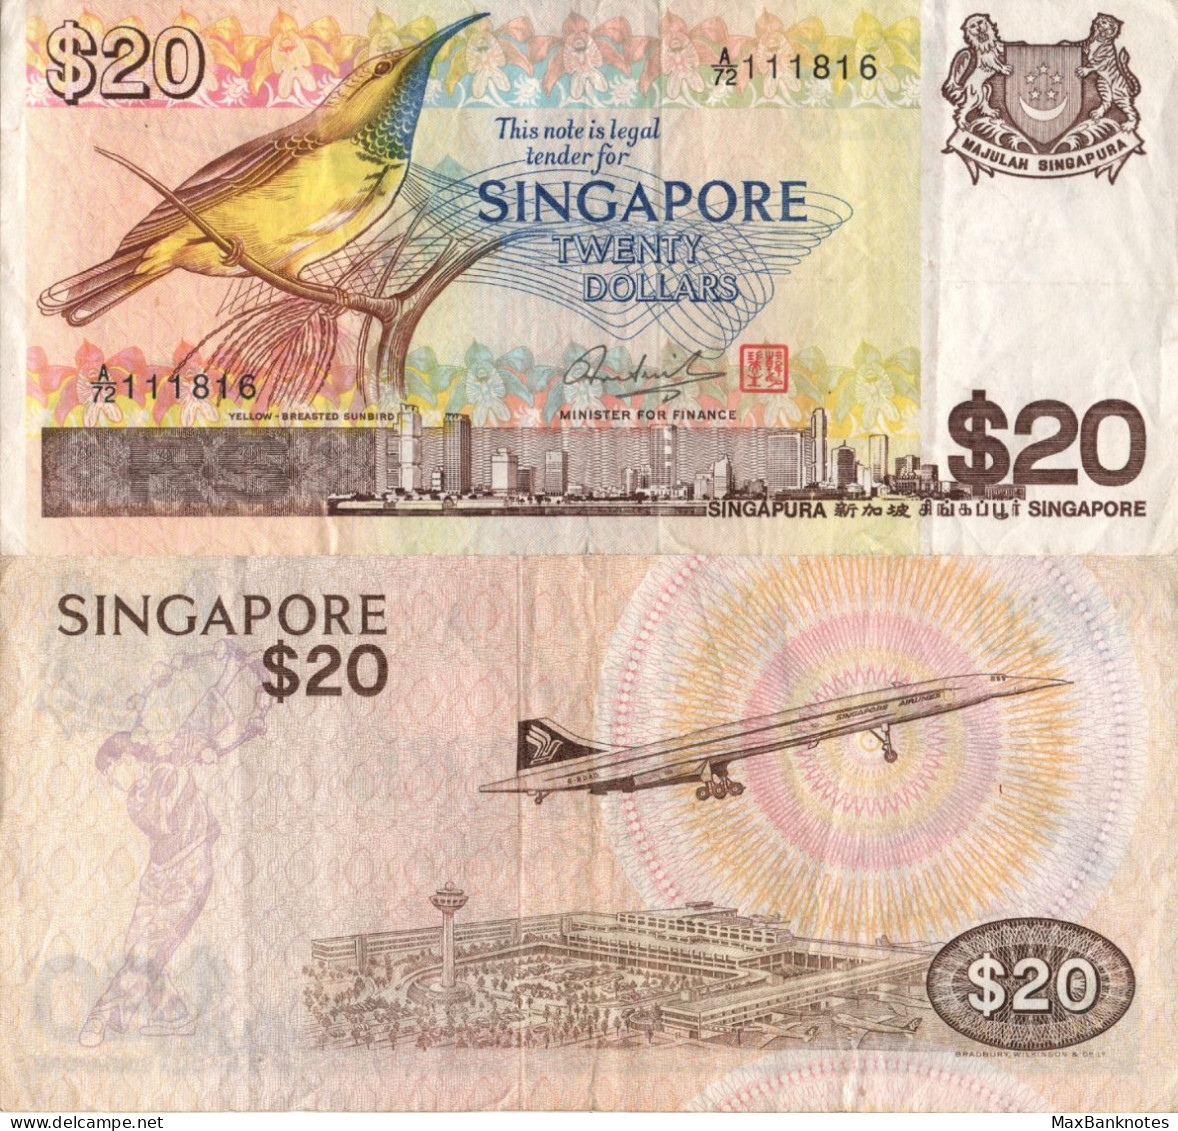 Singapore / 20 Dollars / 1979 / P-12(a) / VF - Singapur